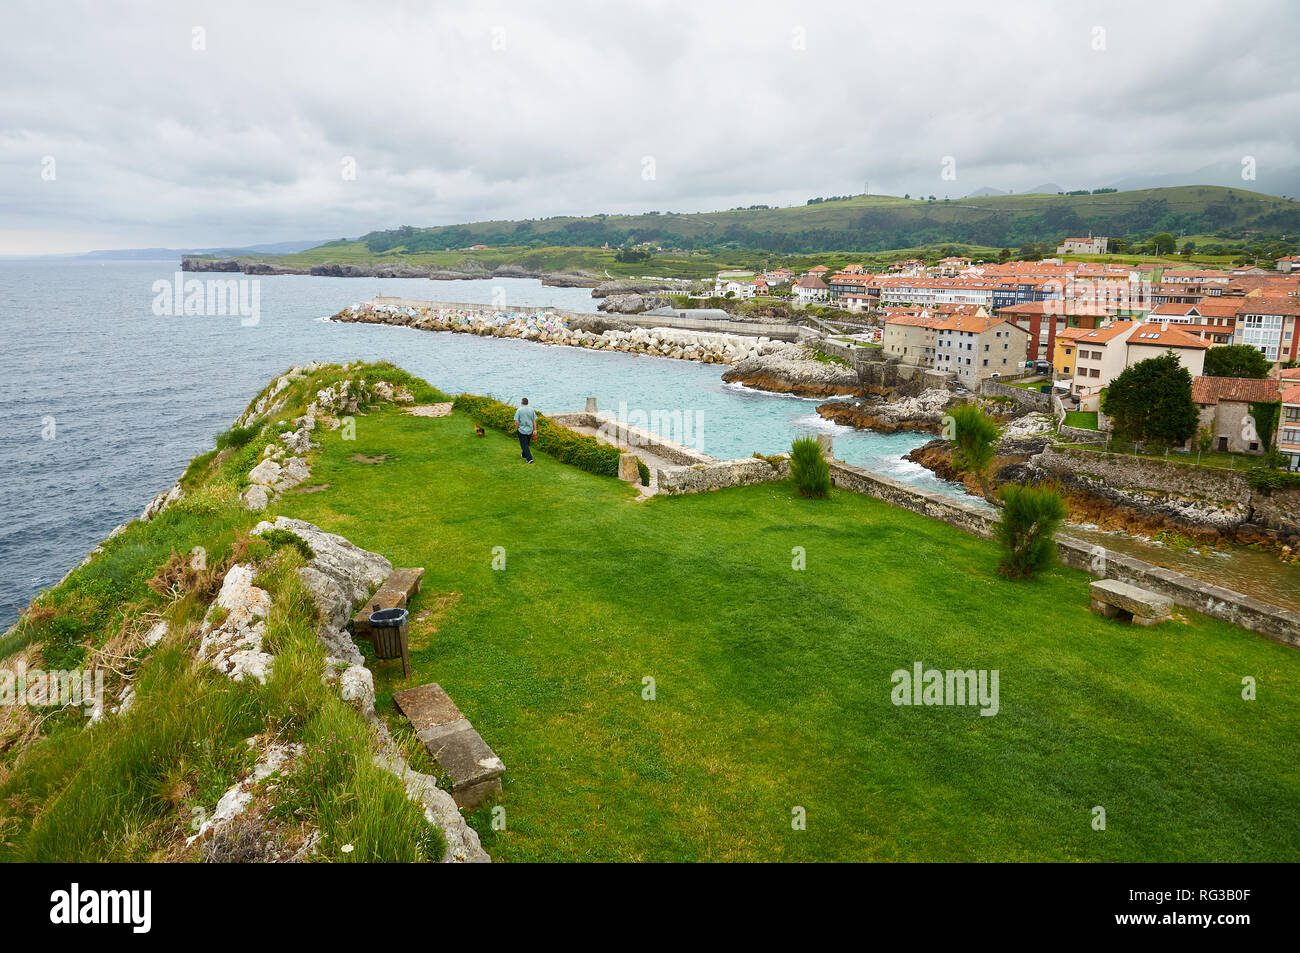 View of Llanes town and port with Cubos de la Memoria and Cantabrian sea coastline from Paseo de San Pedro walk look-out (Llanes, Asturias, Spain) Stock Photo